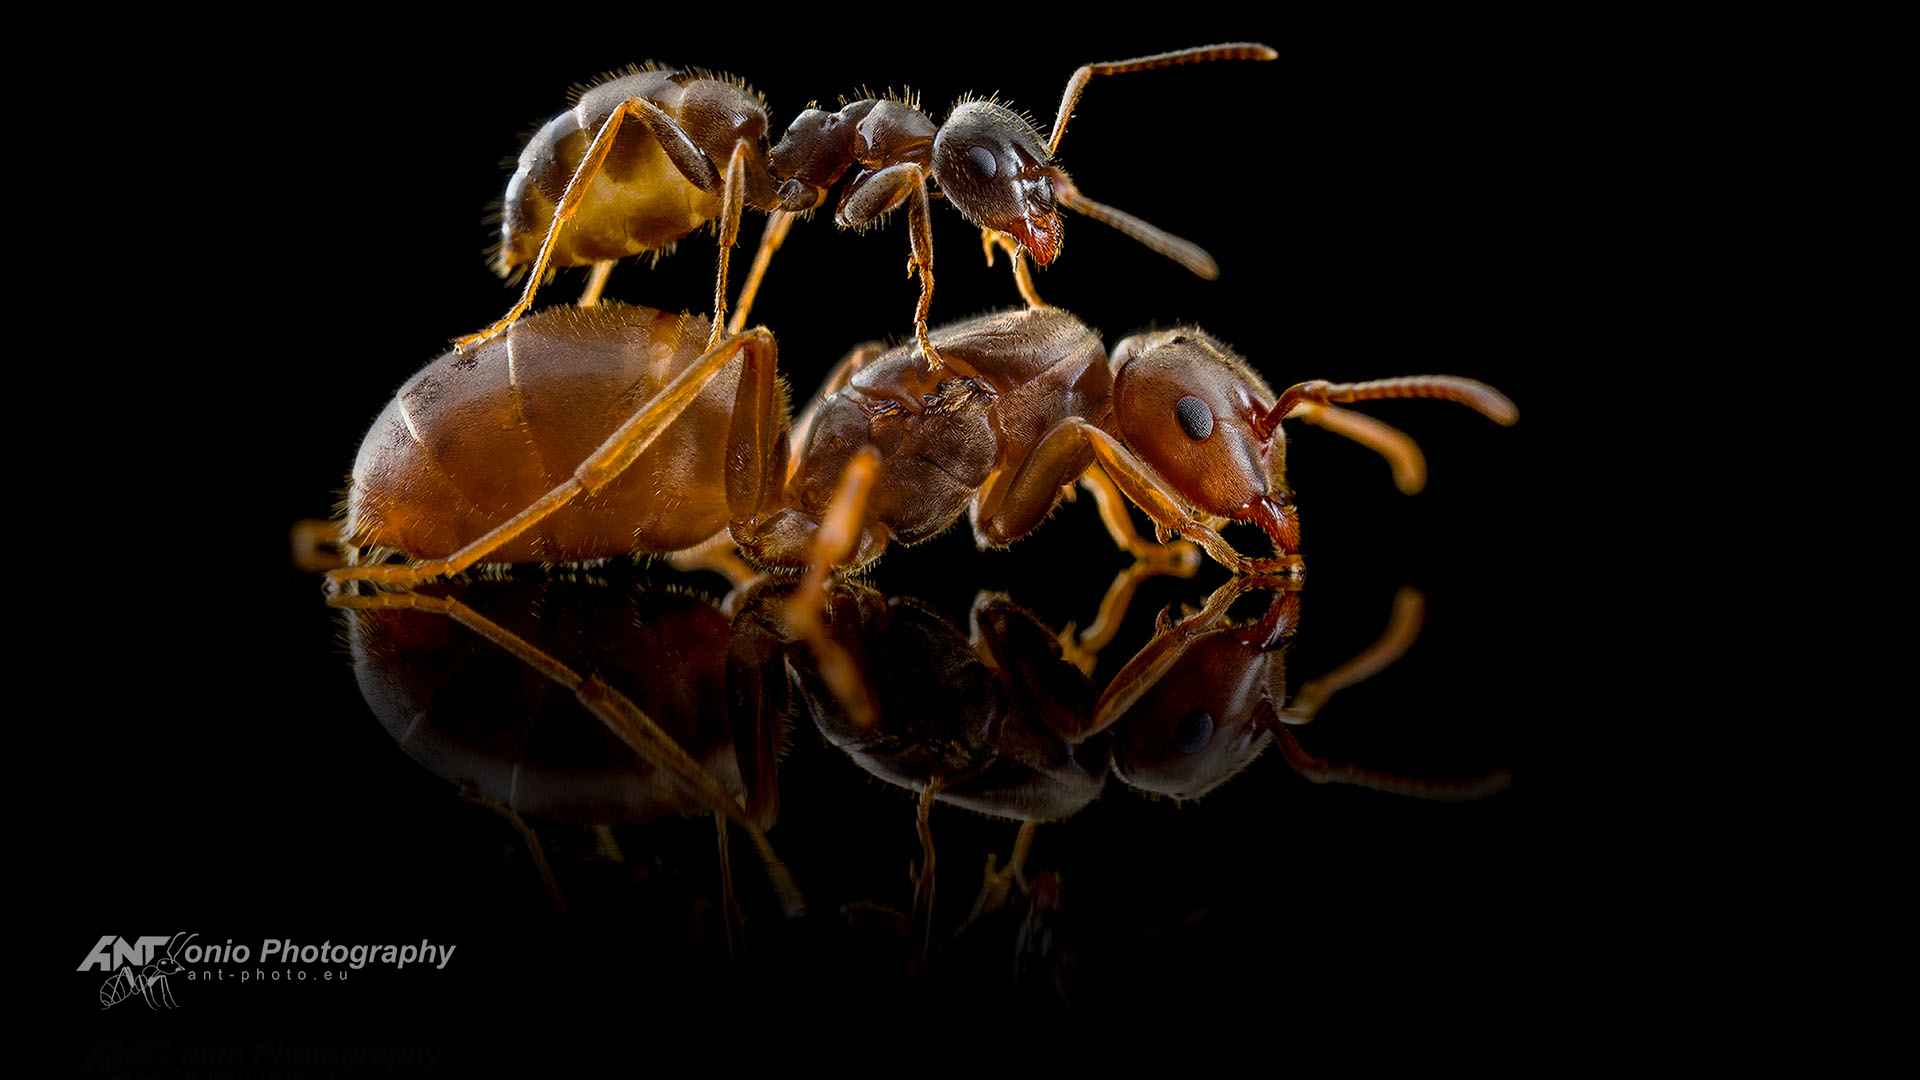 Chthonolasius ants